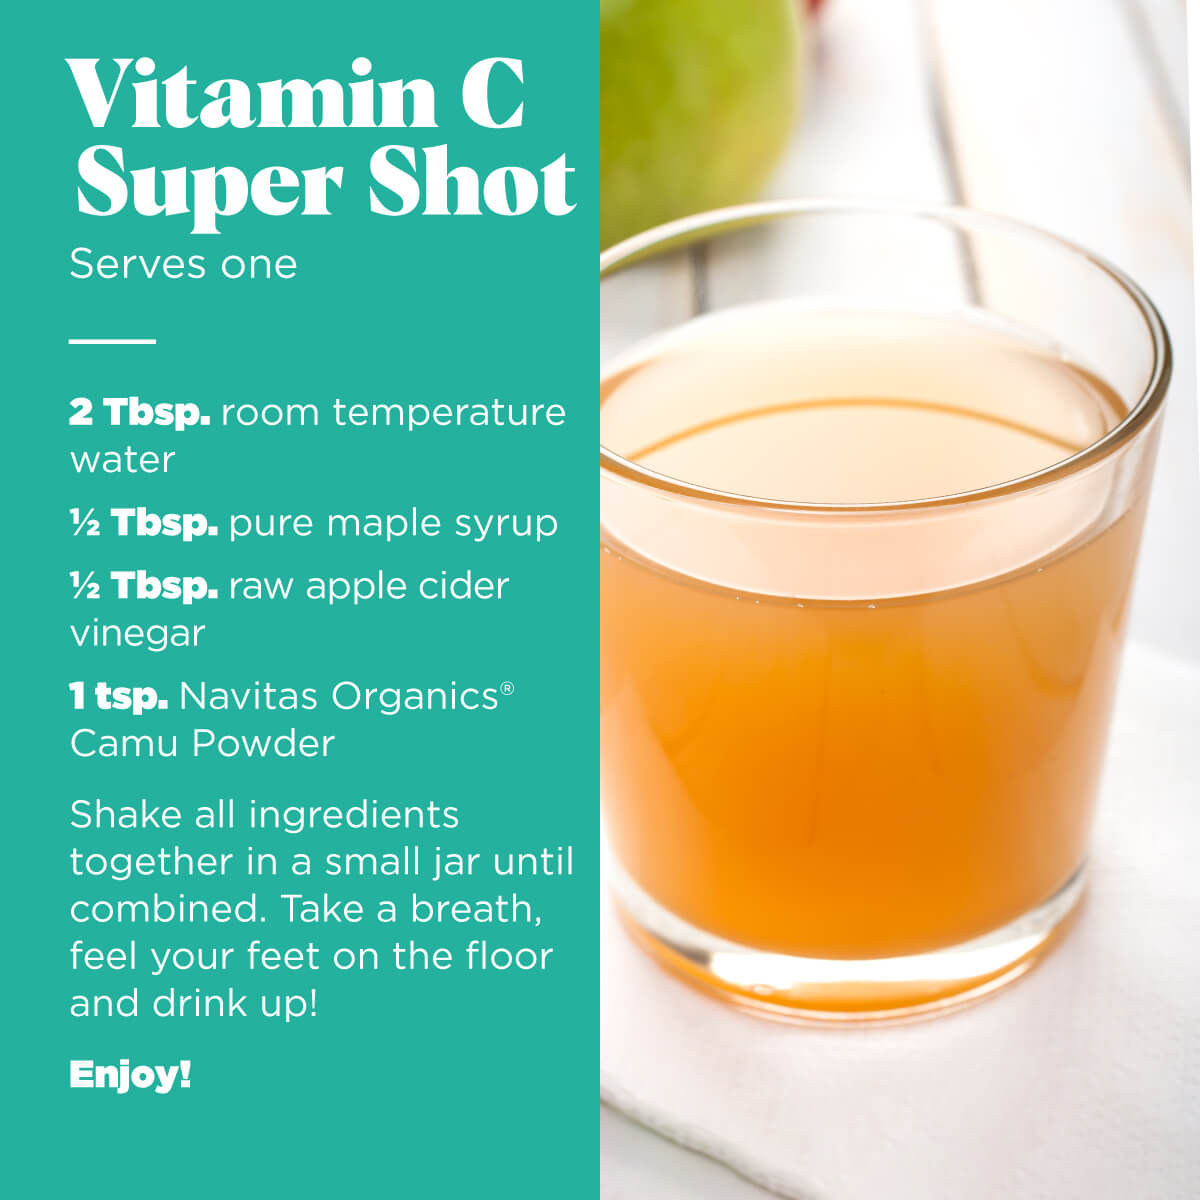 Vitamin C Super Shot Recipe made with Navitas Organics Camu Powder